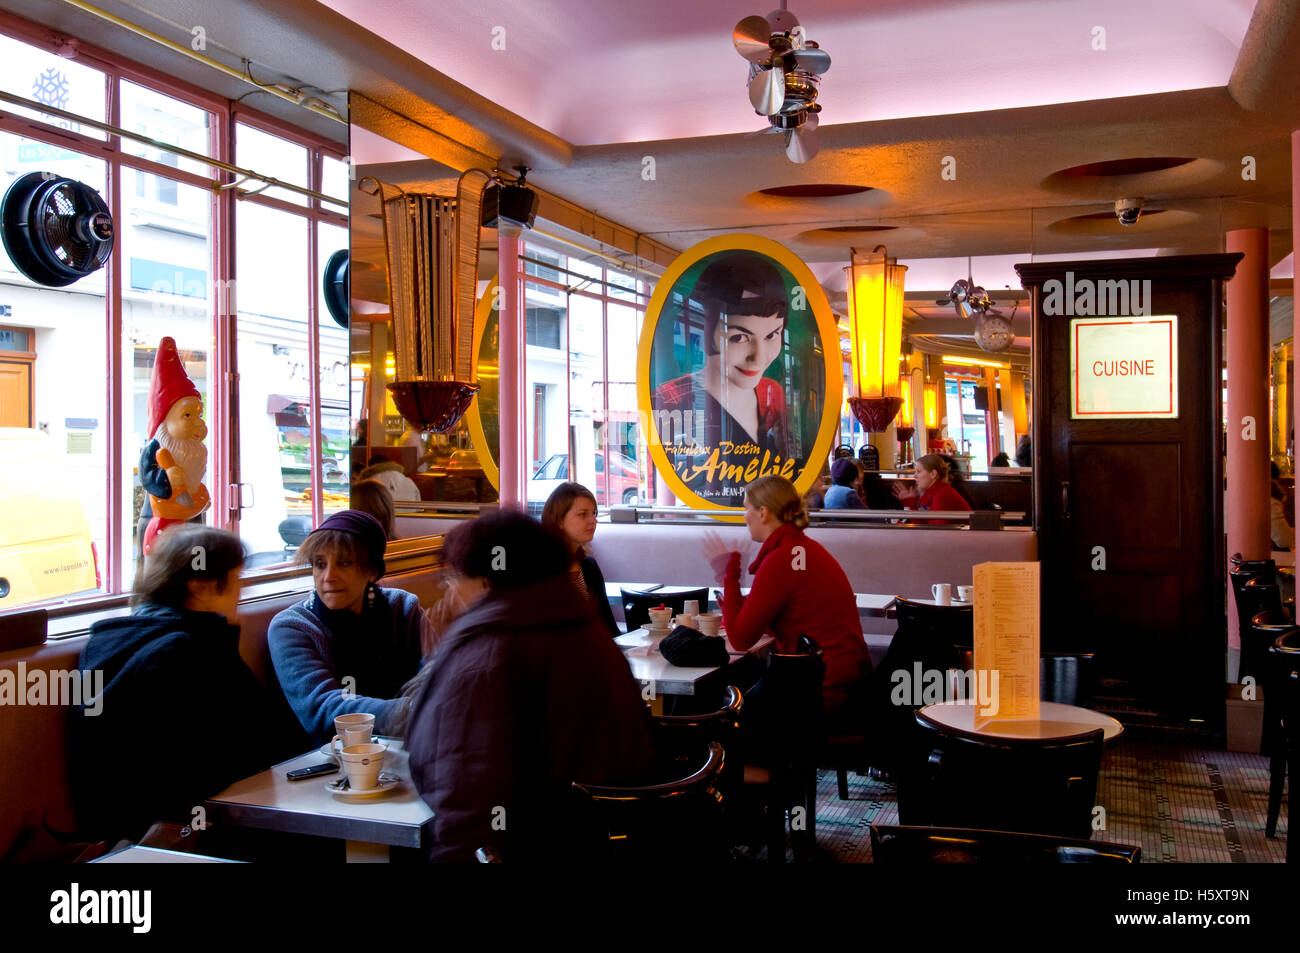 The Café des 2 Moulins, associated with the romantic comedy film 'Amelie'. Stock Photo